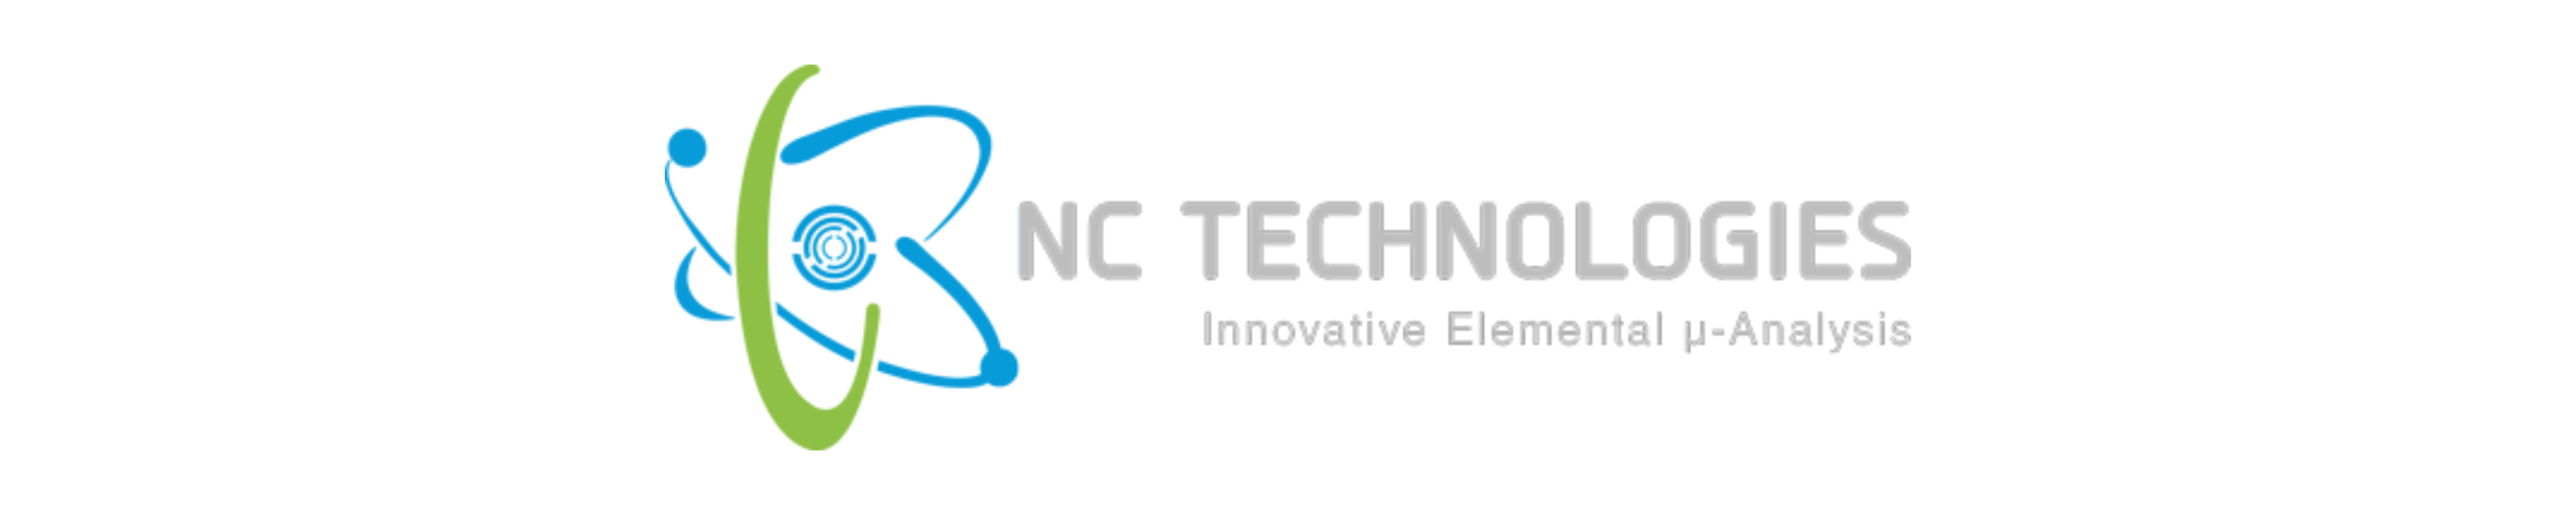 NC technologies